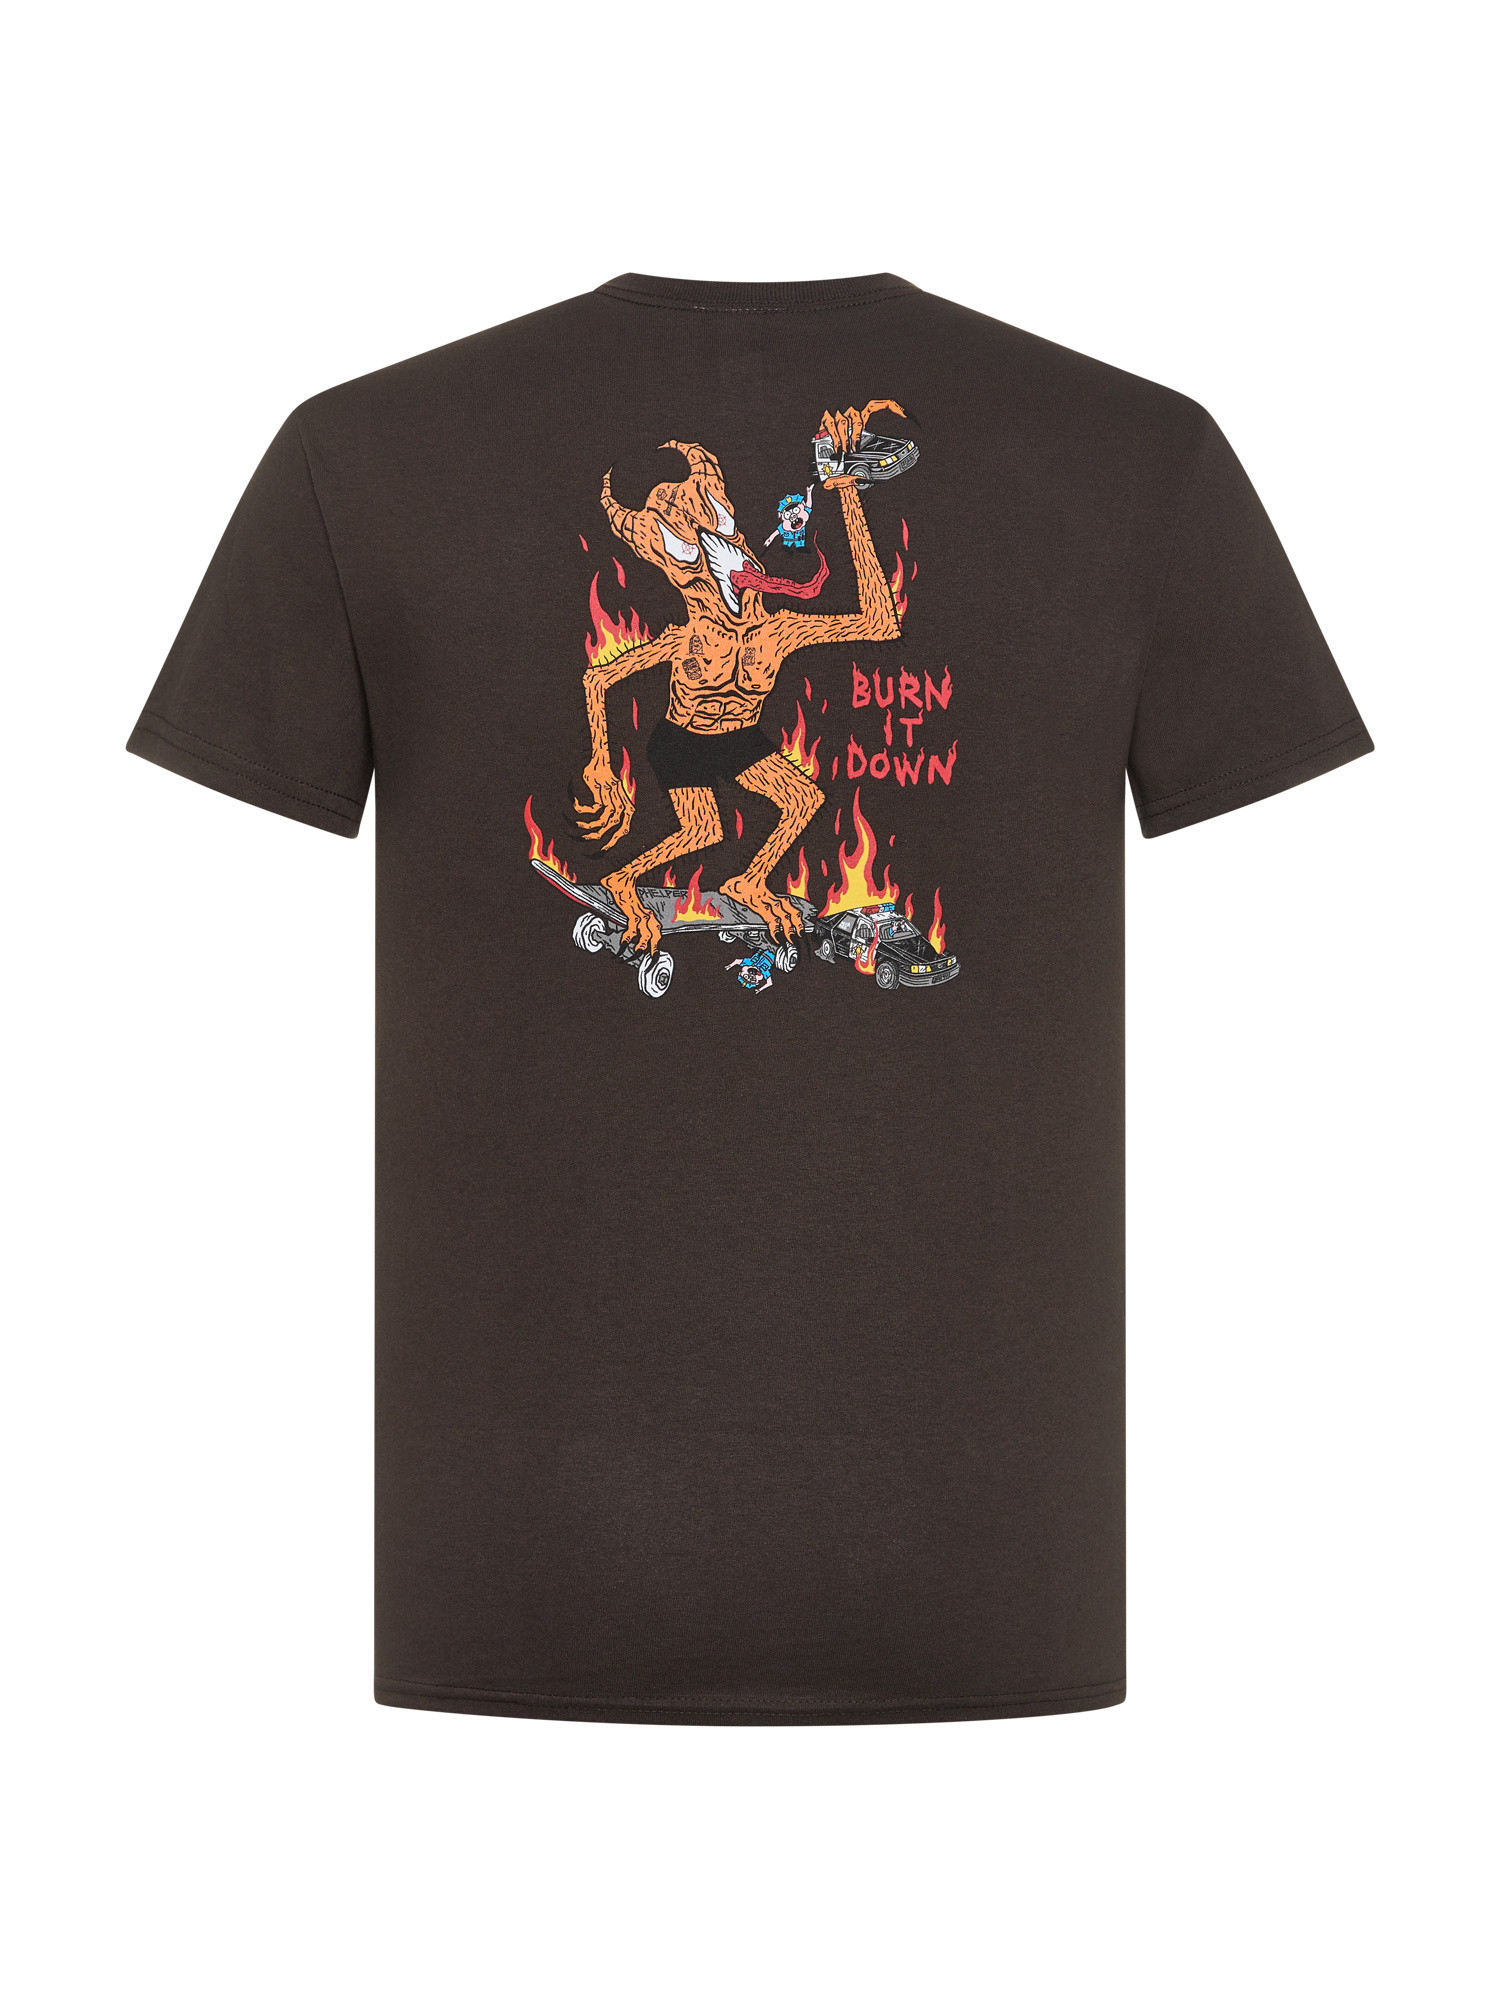 Thrasher - Burn it down print T-Shirt, Brown, large image number 1